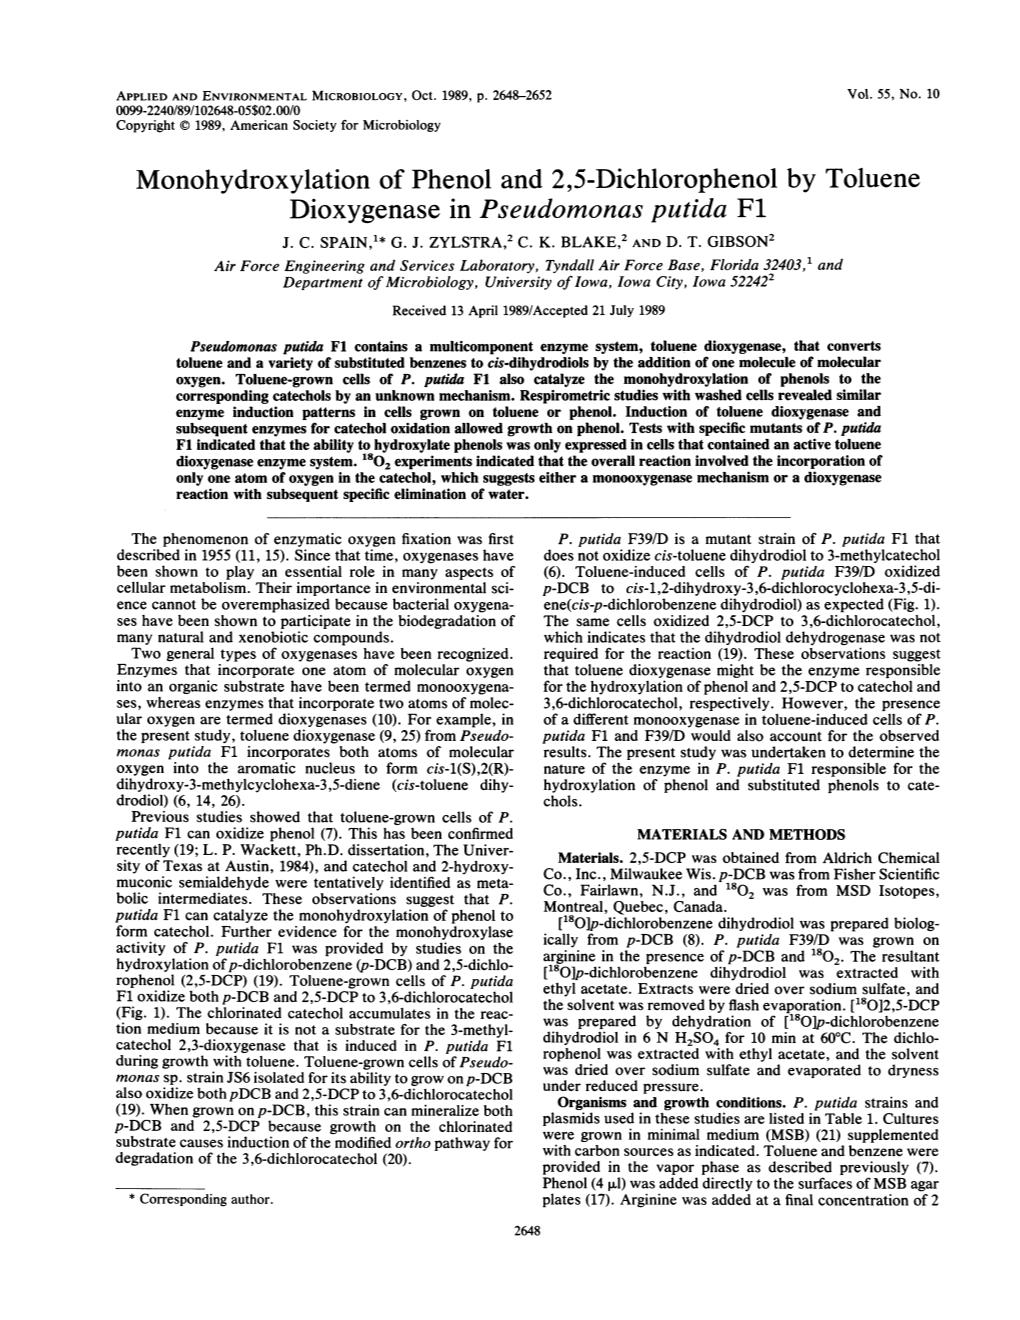 Monohydroxylation of Phenoland 2,5-Dichlorophenol by Toluene